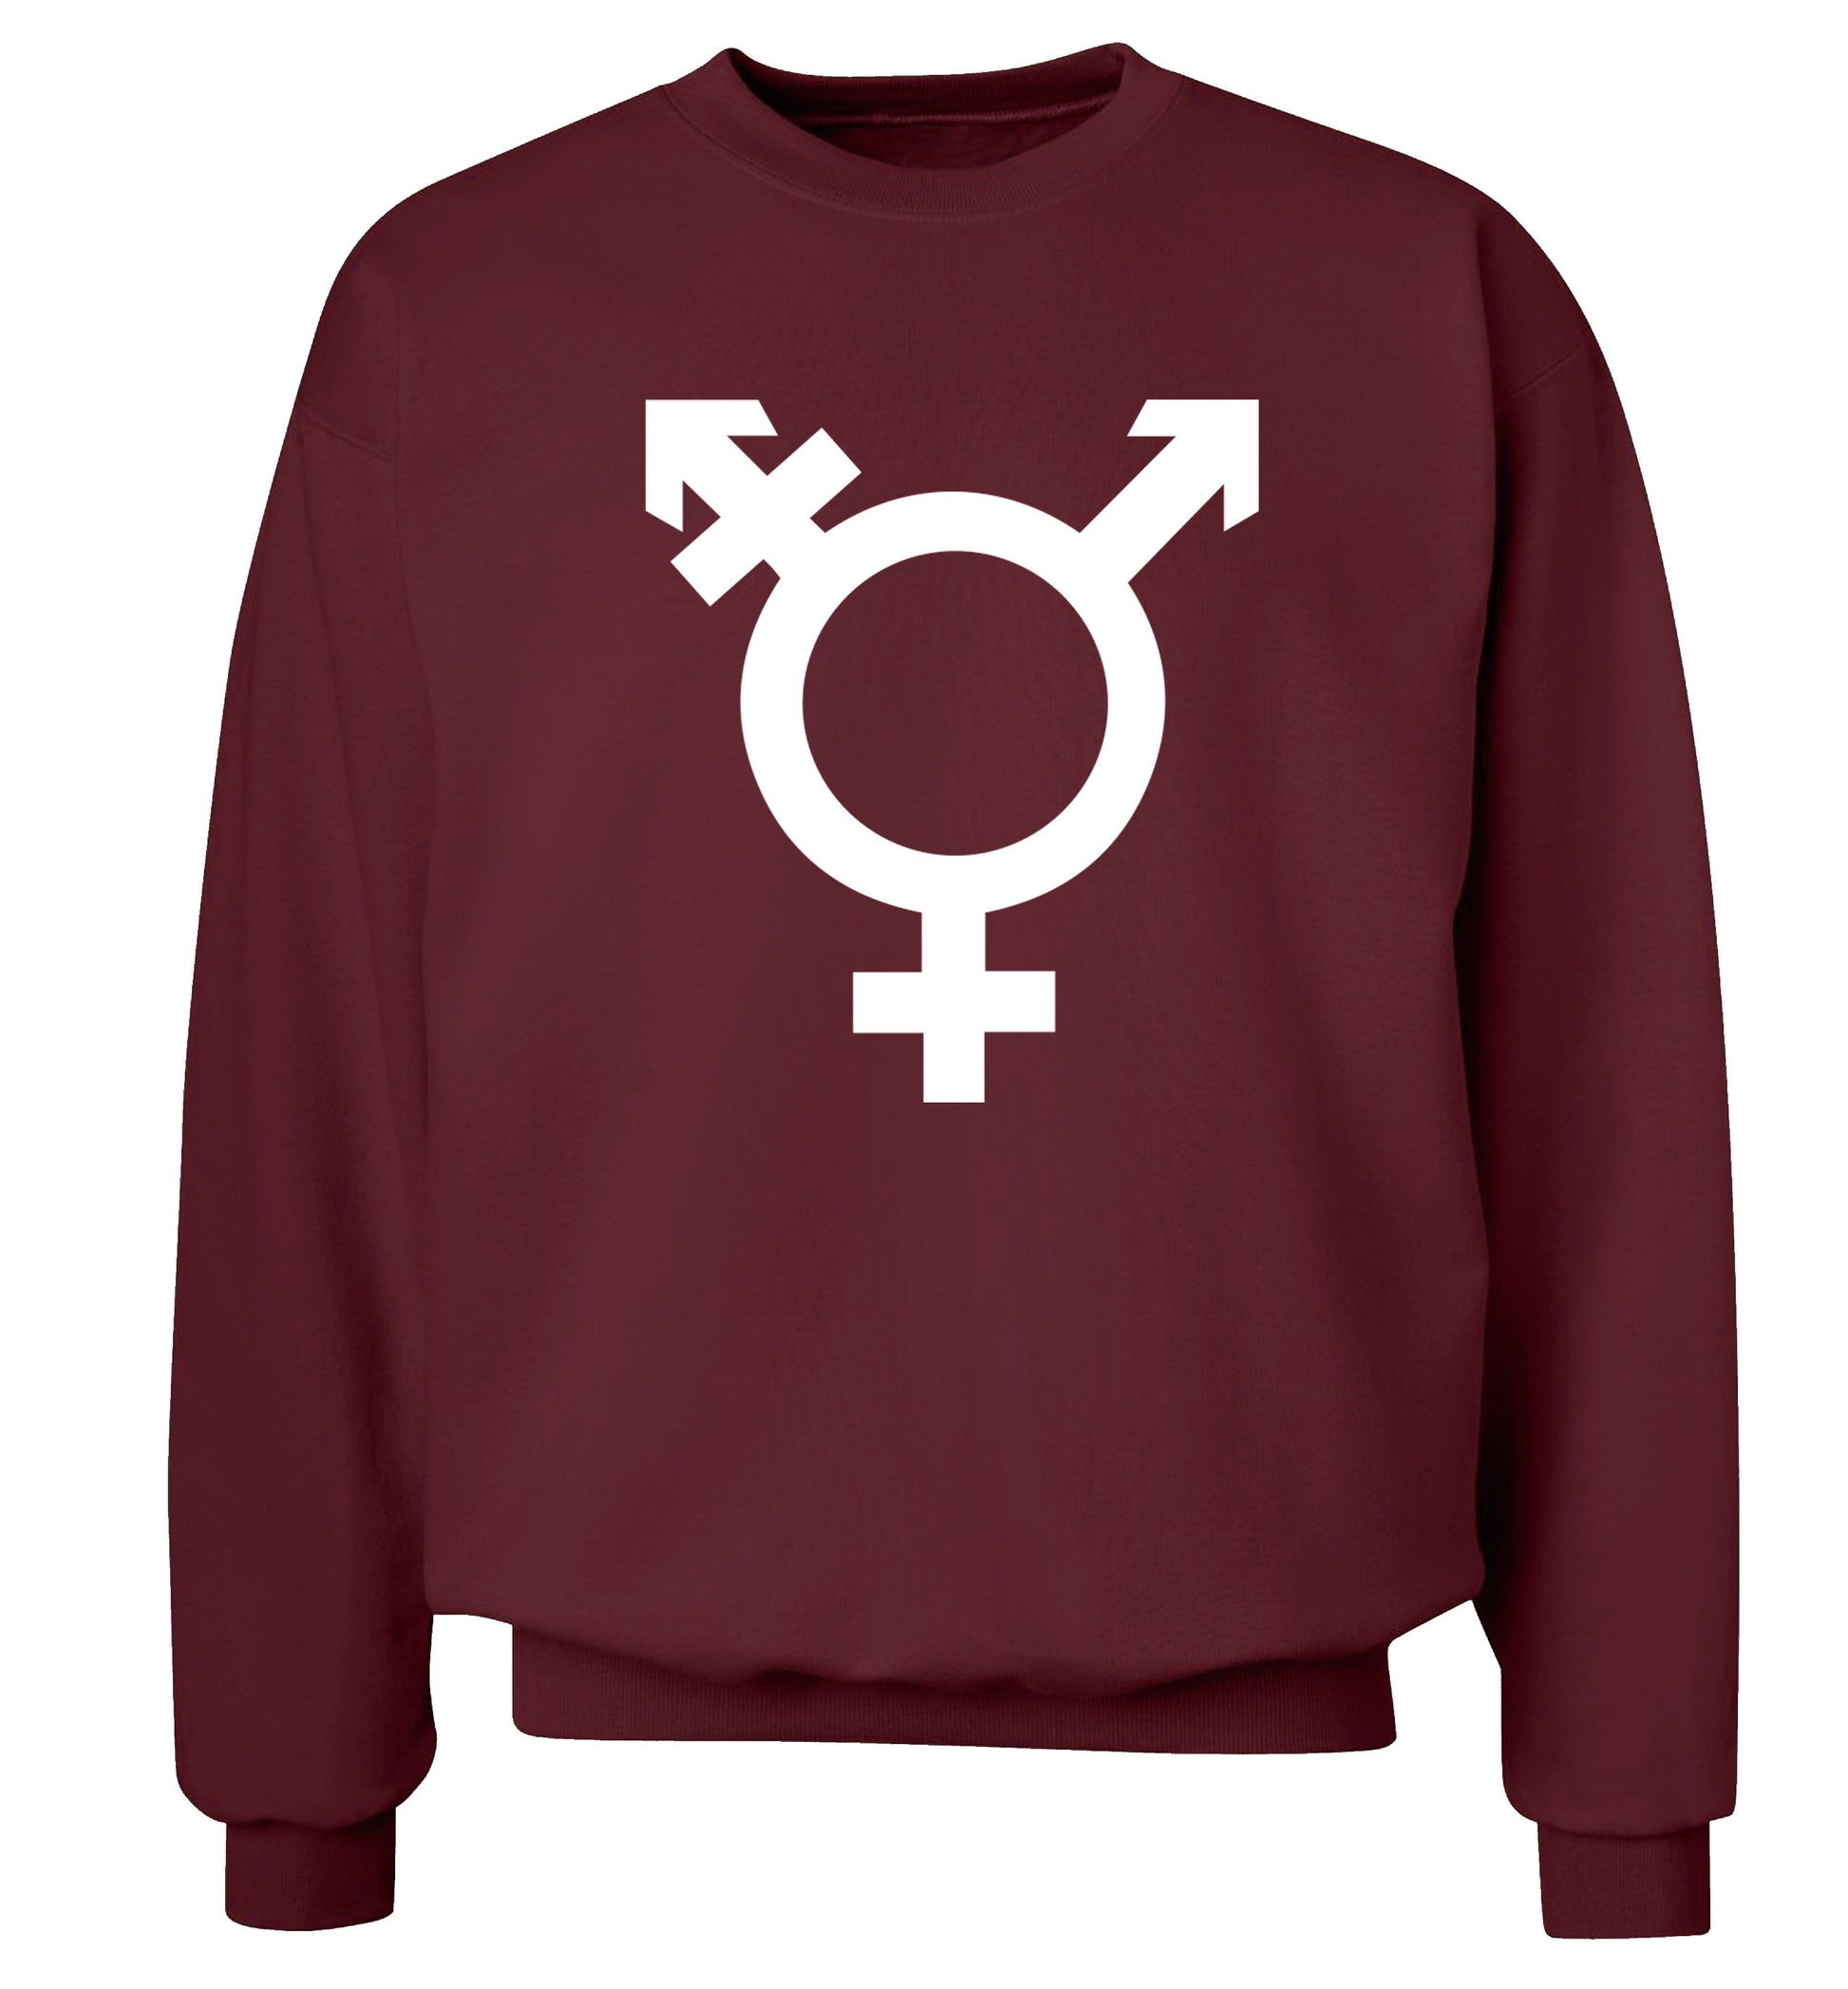 Gender neutral symbol large Adult's unisex maroon Sweater 2XL